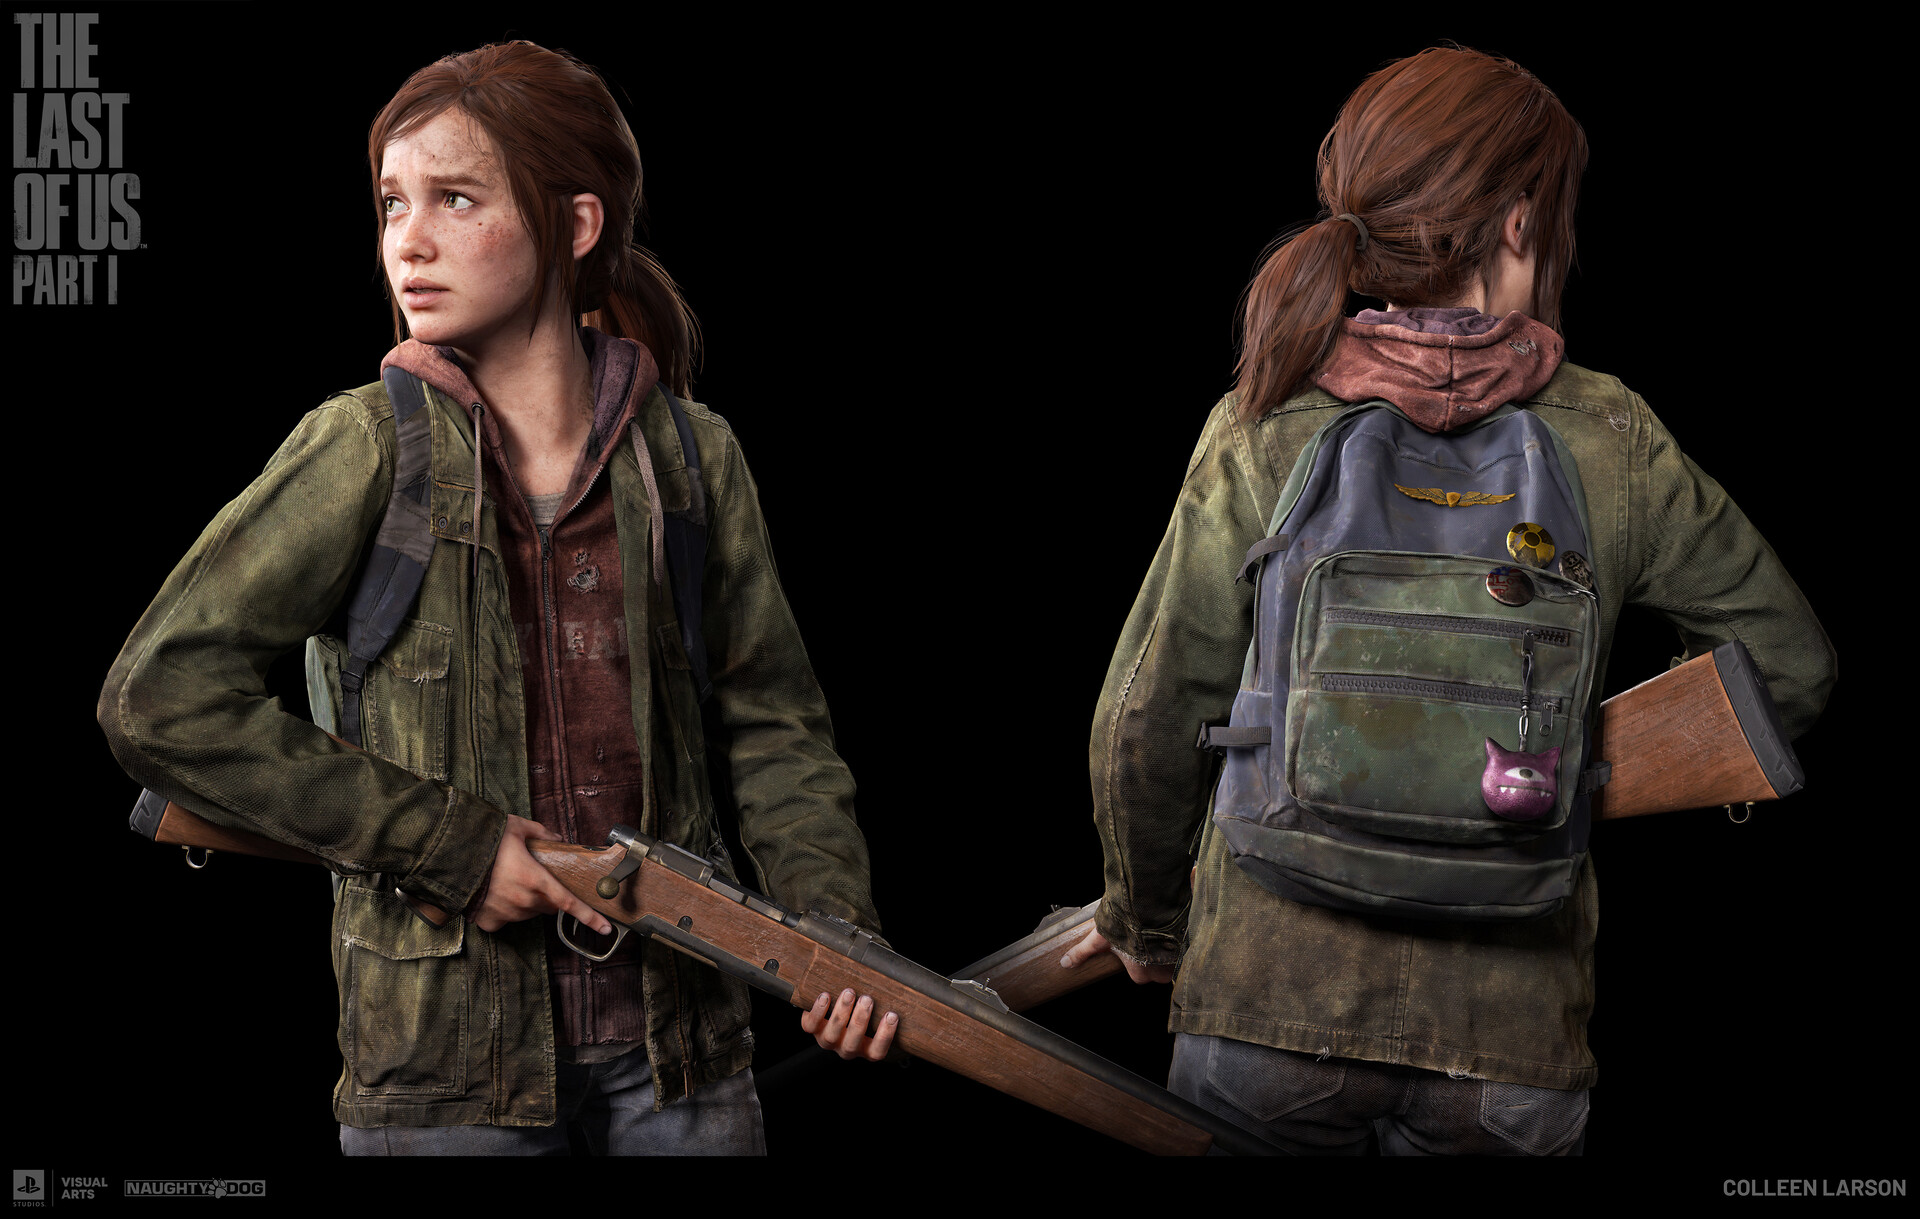 ArtStation - The Last of Us Part I: Ellie Spring Costume